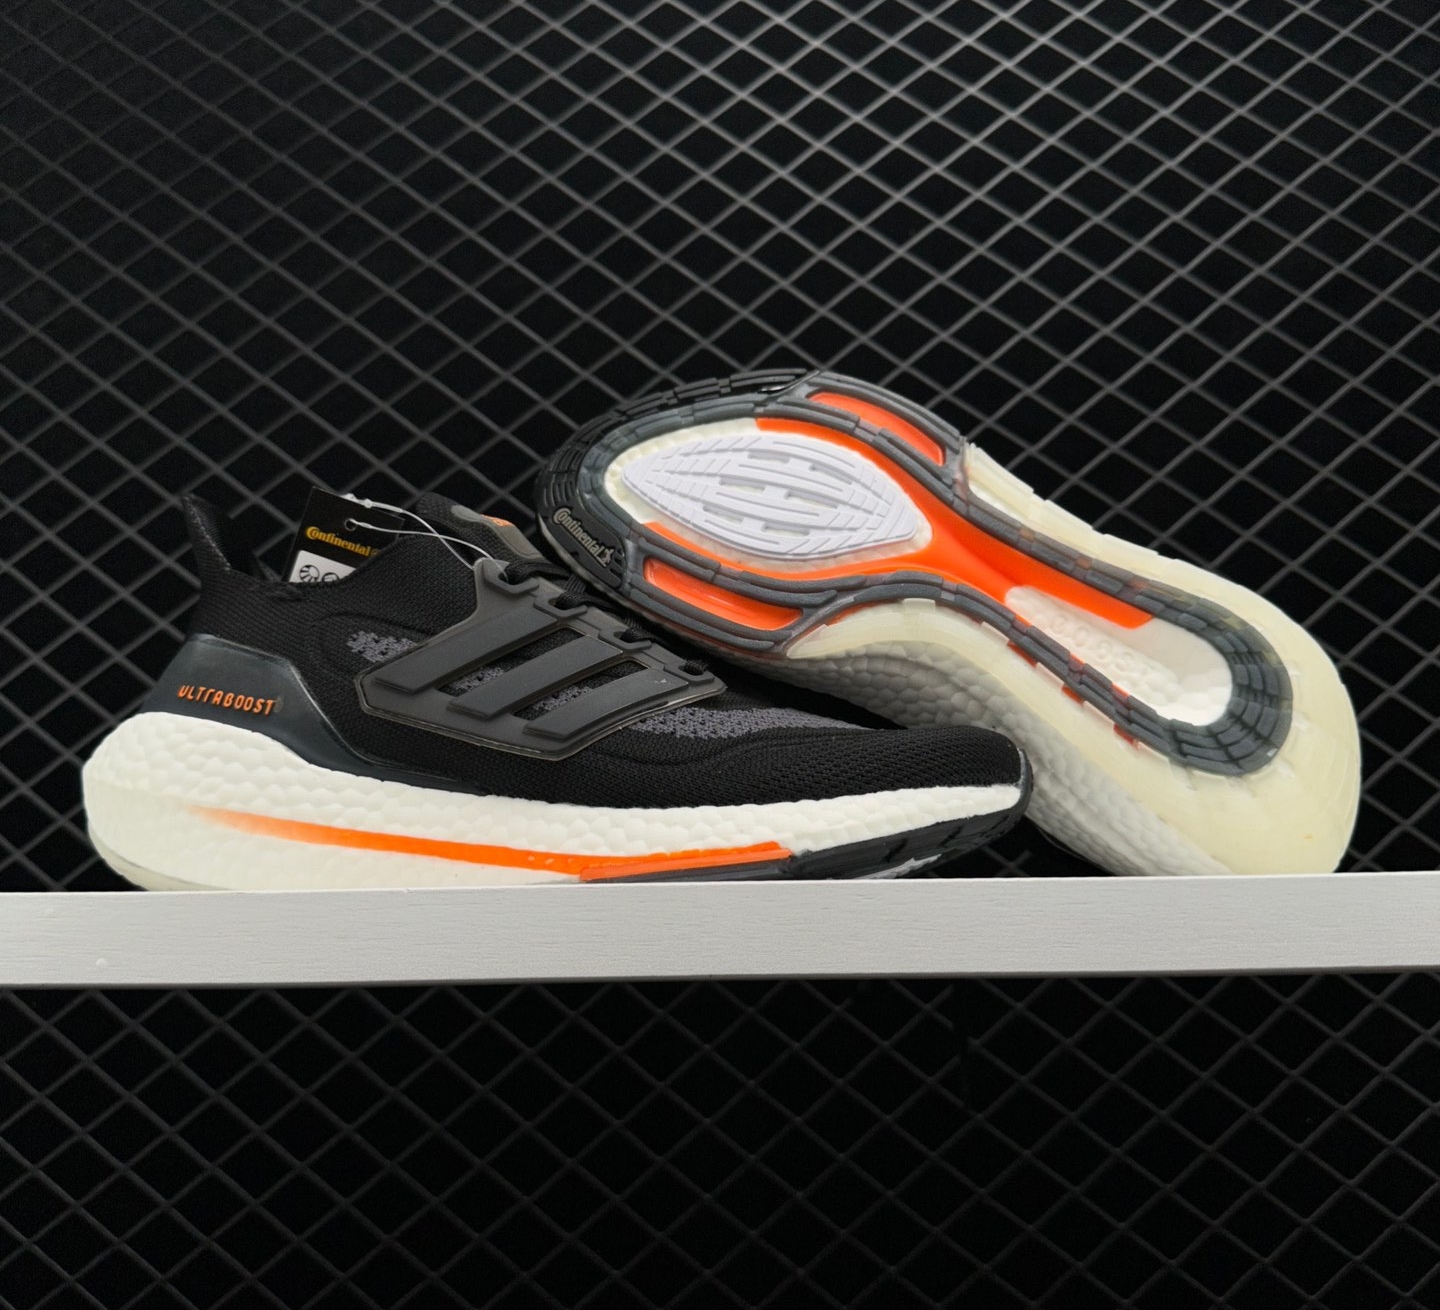 Adidas UltraBoost 21 'Black Screaming Orange' FY0389 - High-Performance Athletic Shoes